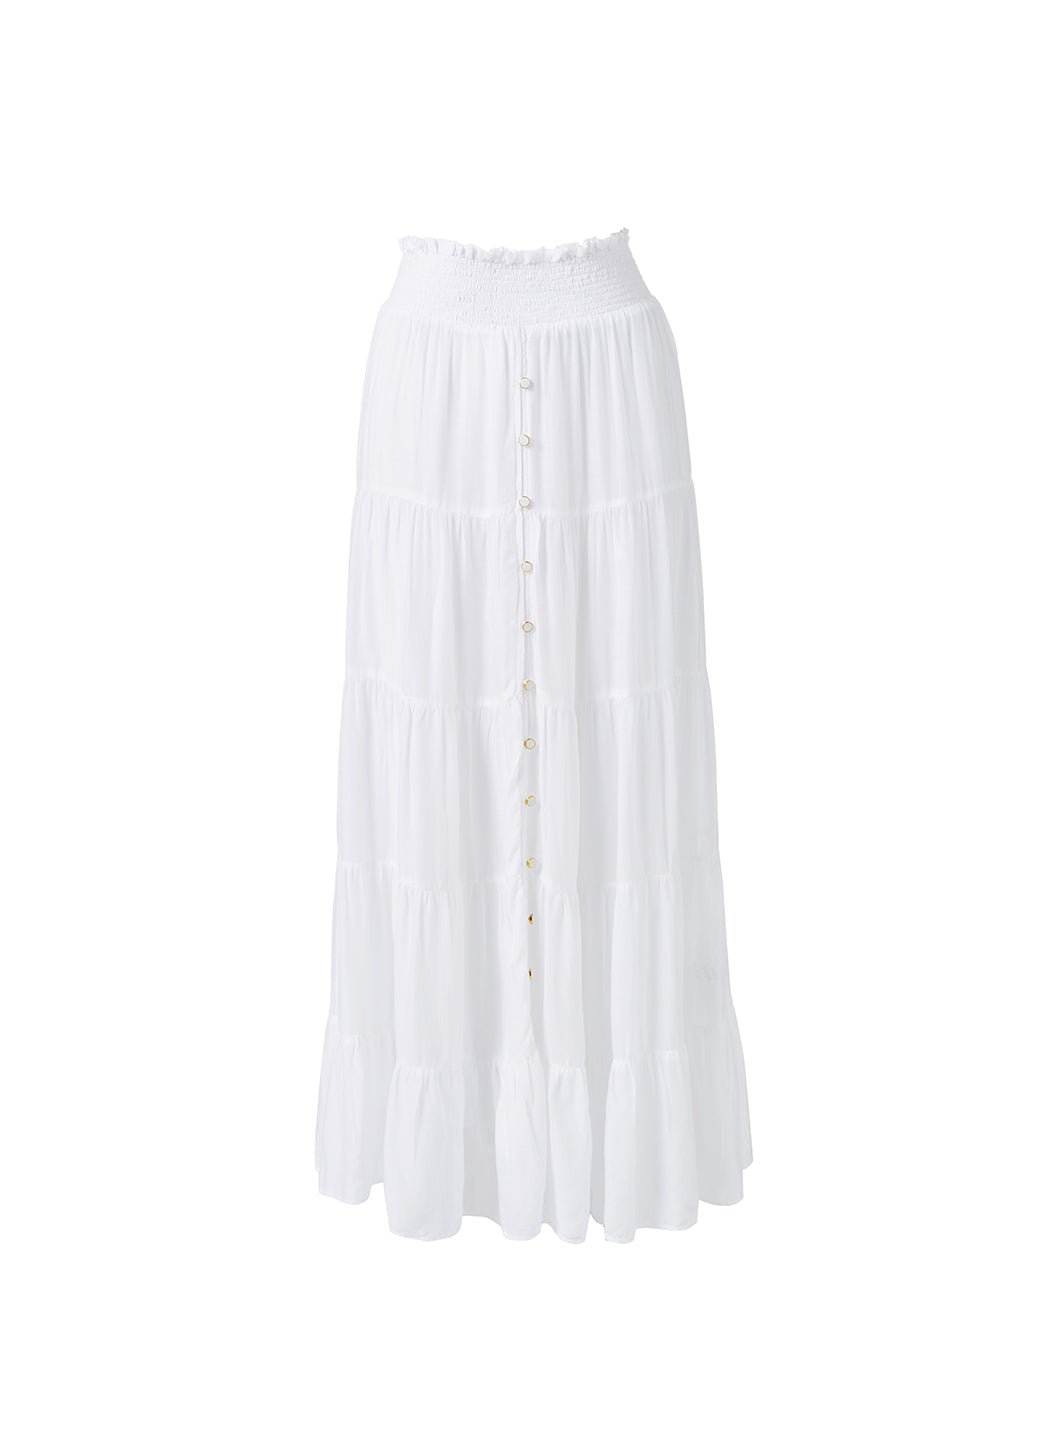 dee-white-skirt_cutout